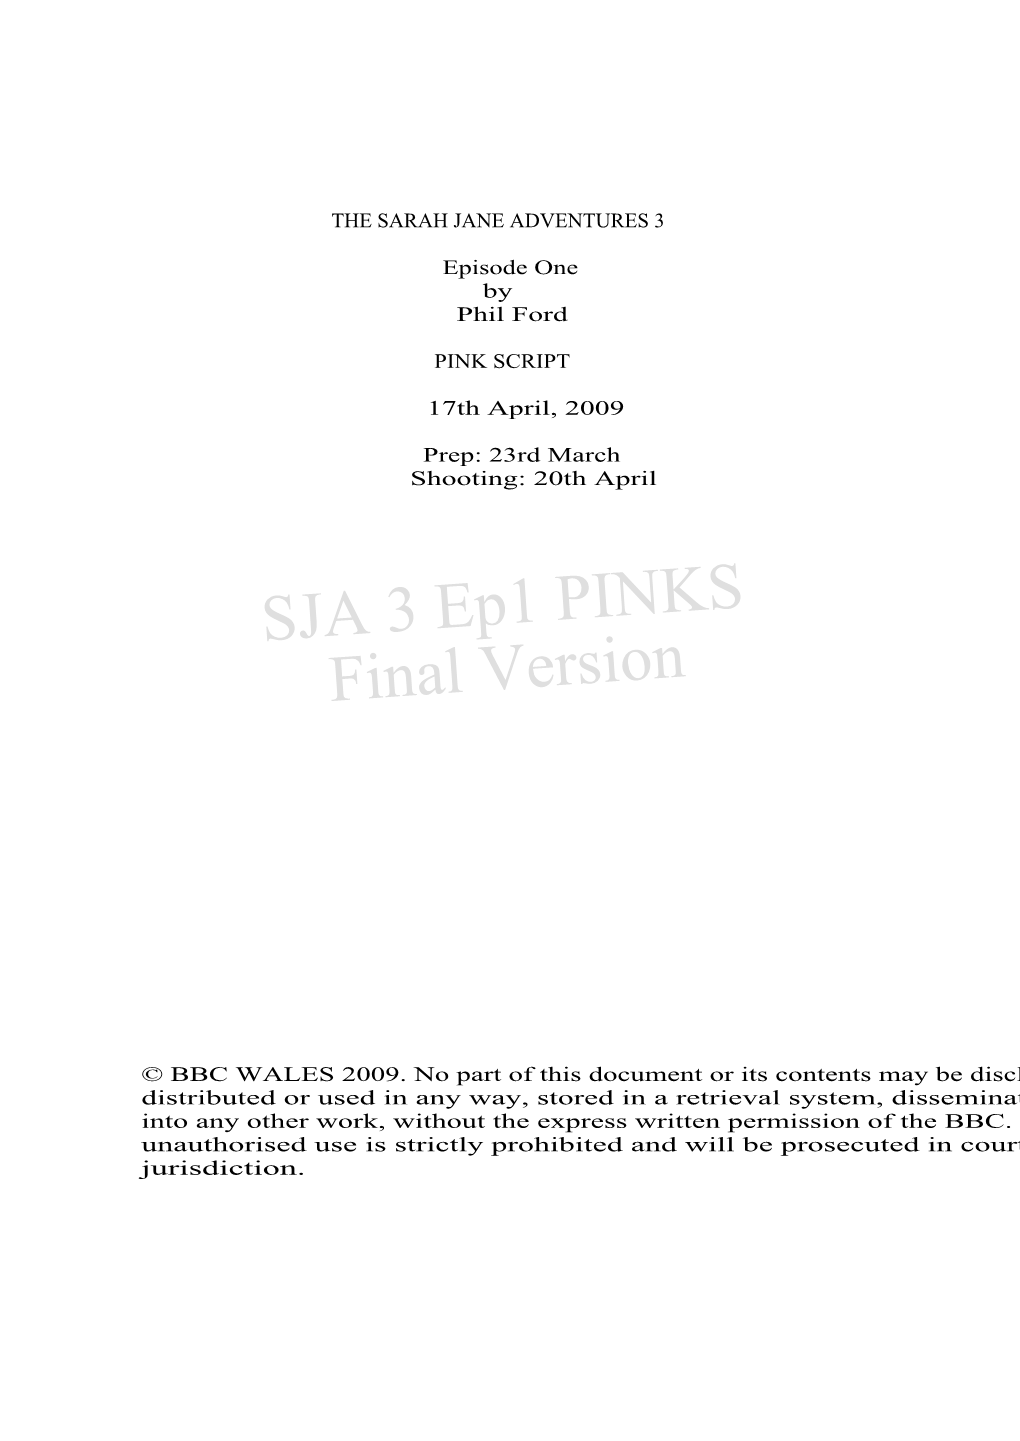 SJA 3 Ep1 PINKS Final Version